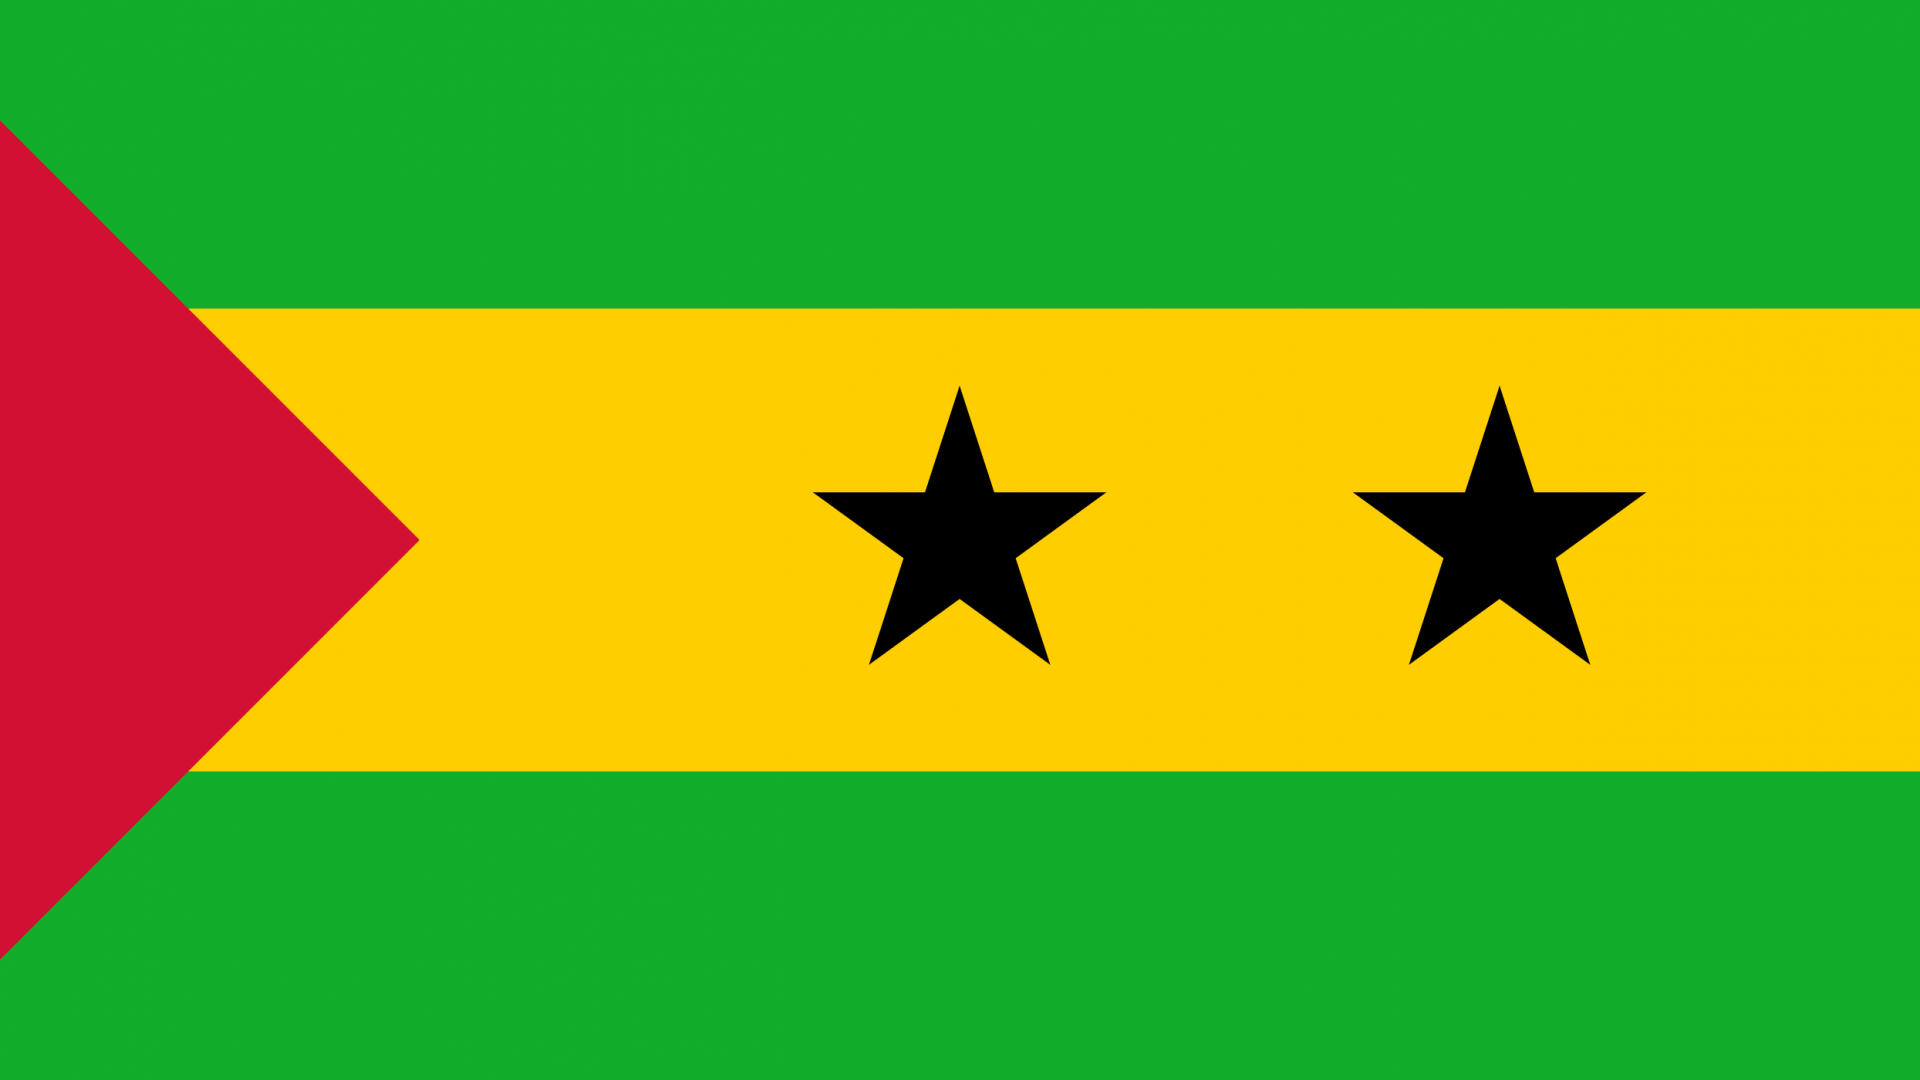 Sao Tome and Principe Flag   Wallpaper High Definition High Quality 1920x1080